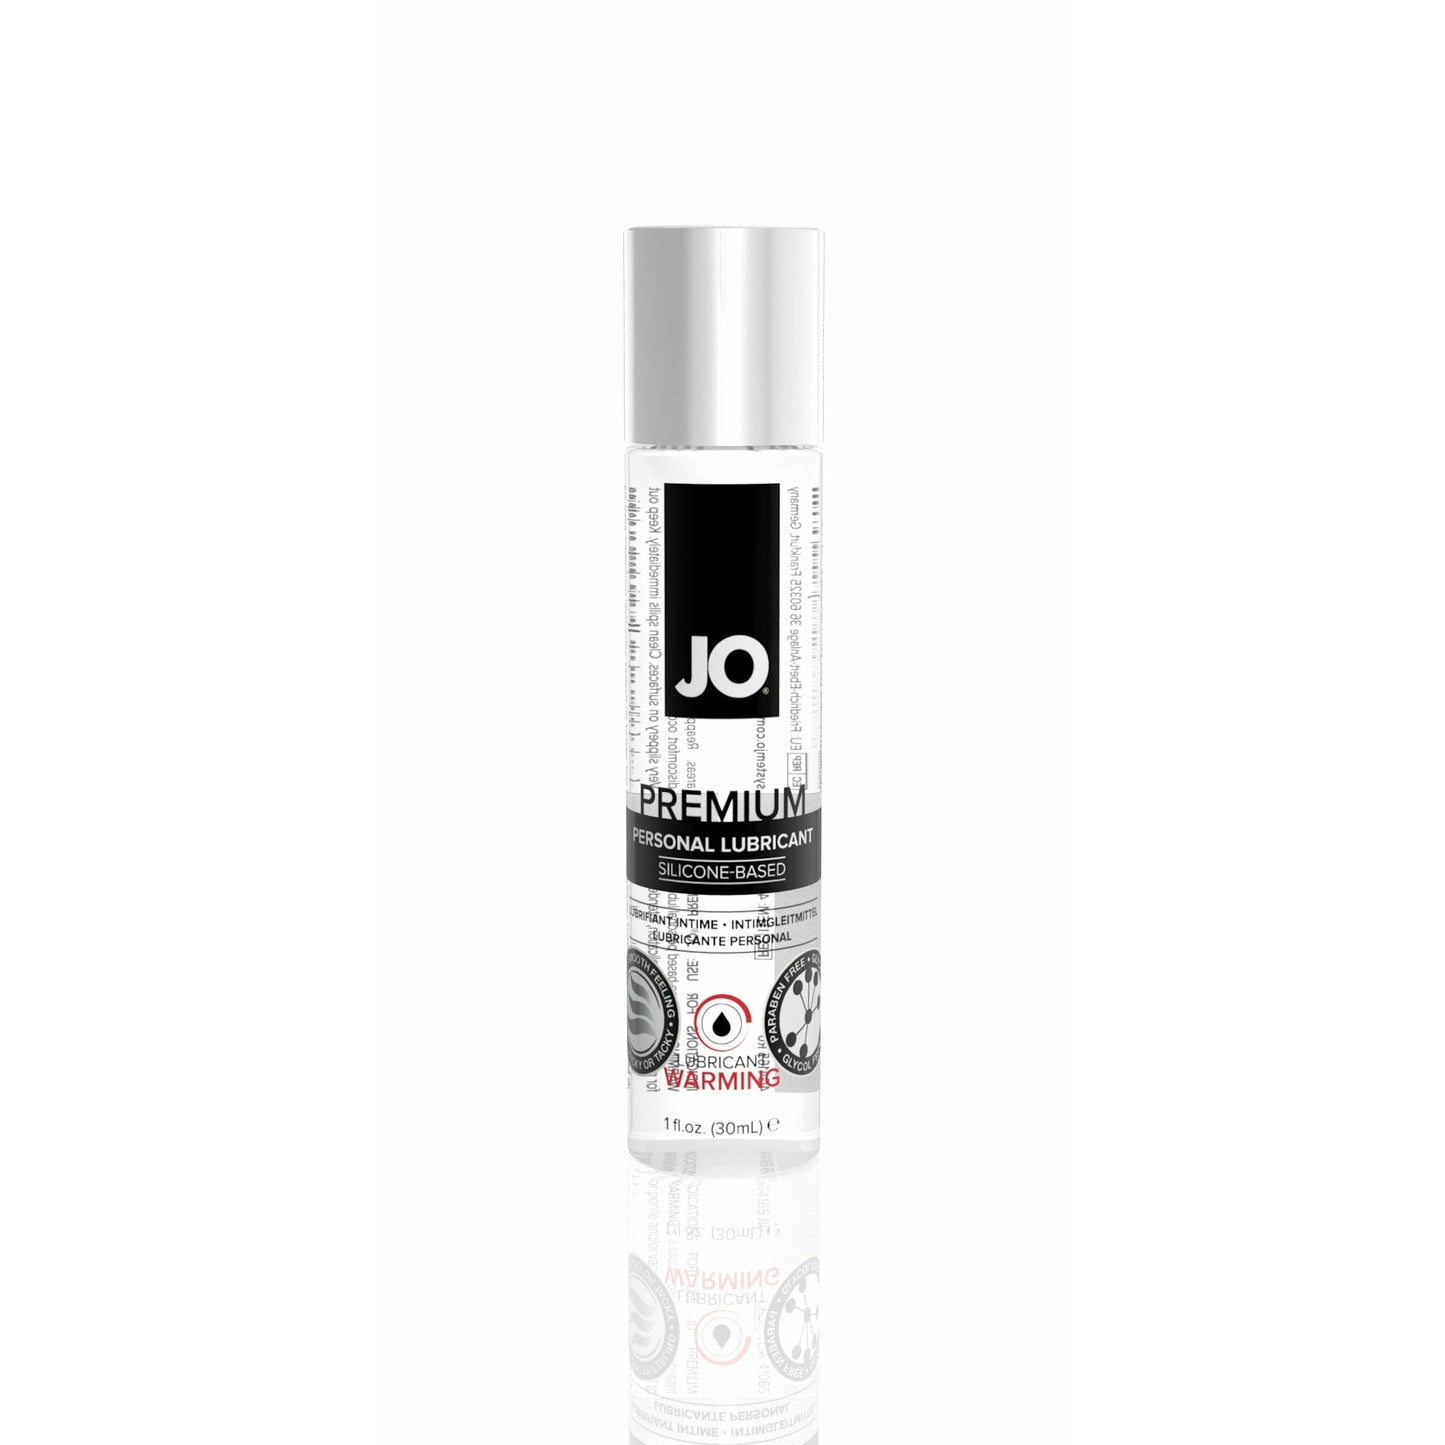 JO Premium Lubricant Warming - 1oz / 30ml